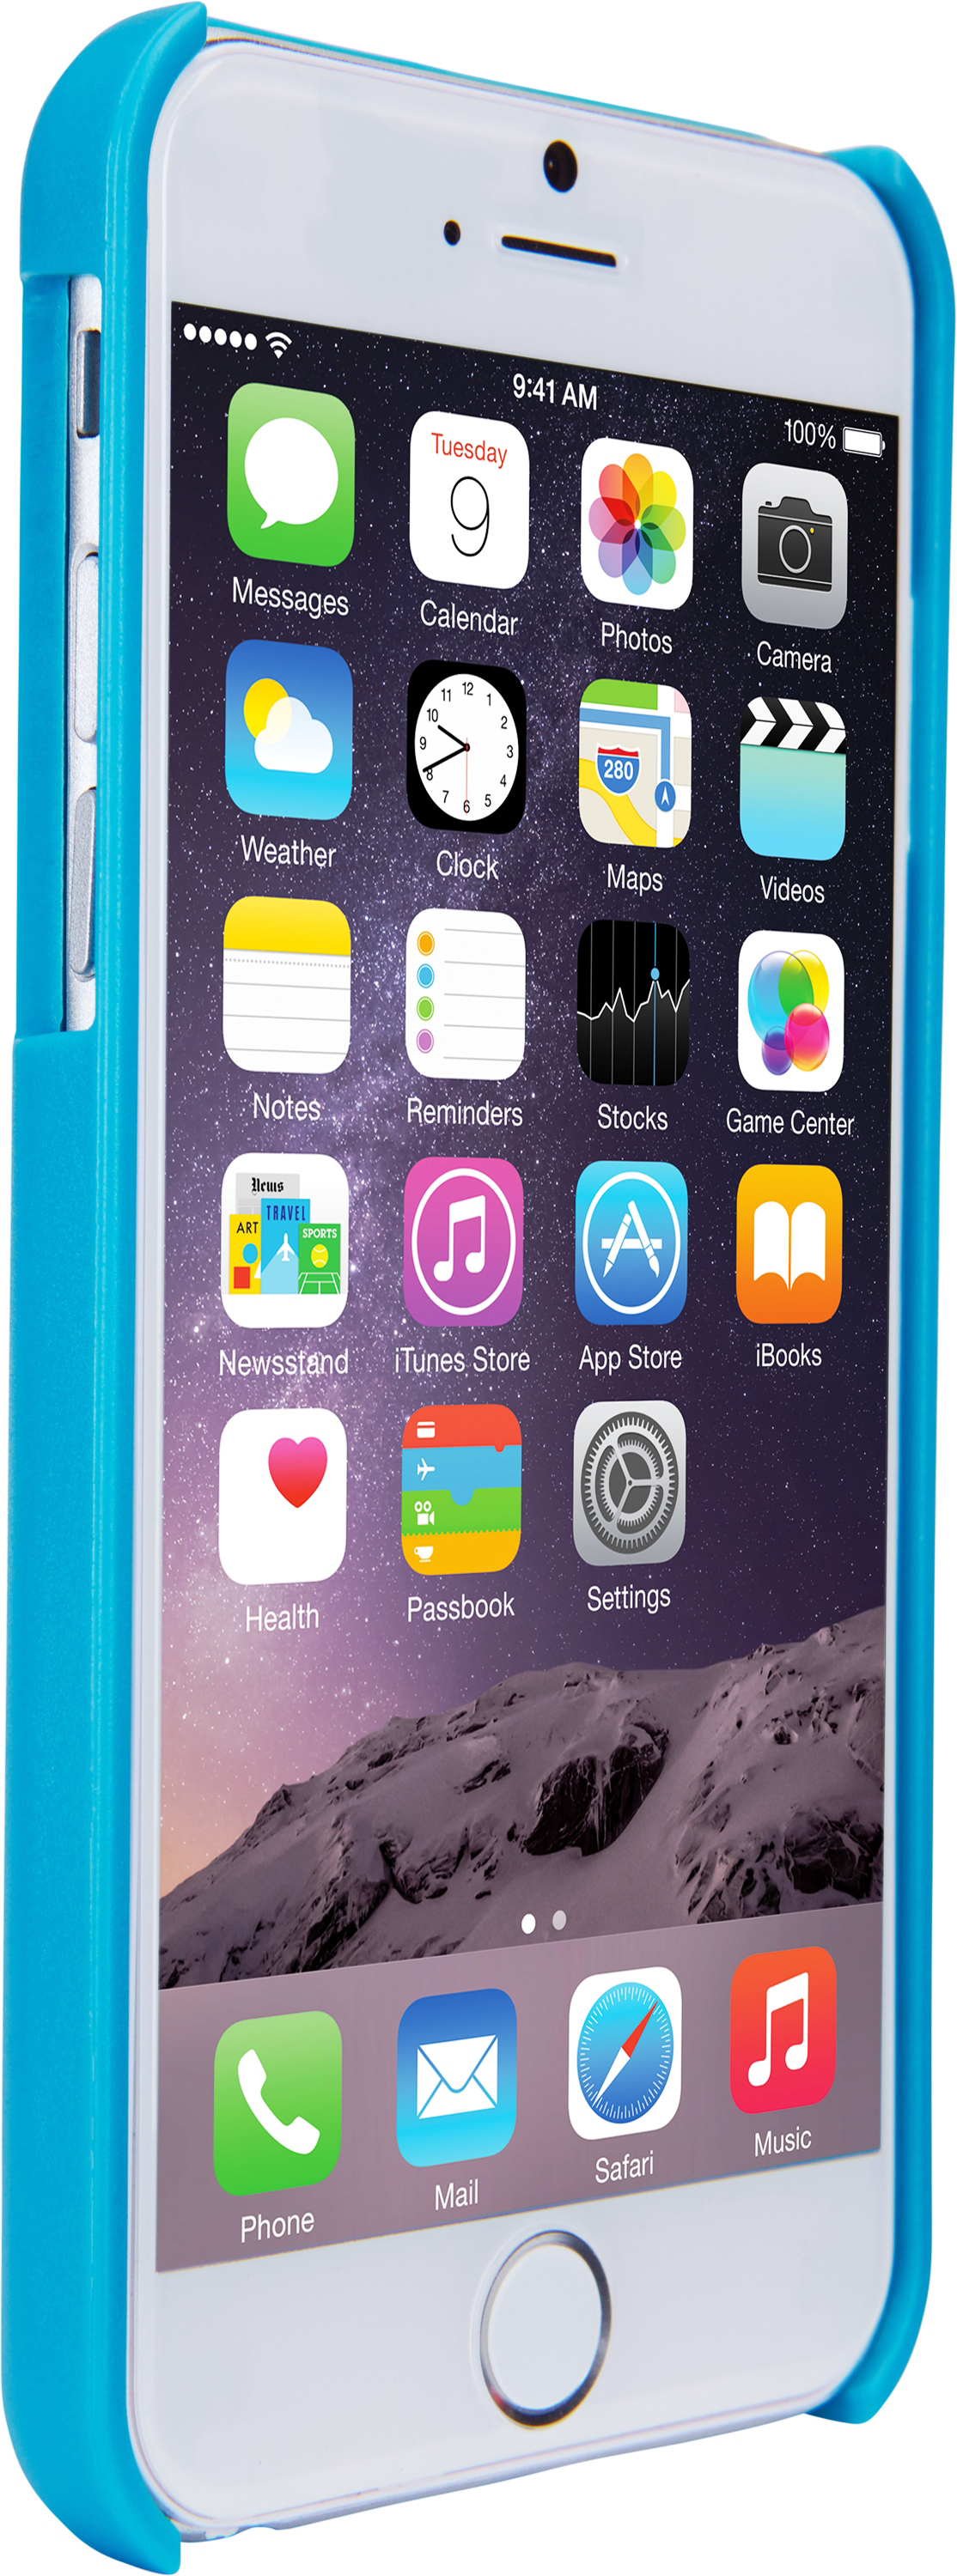 6s, THULE Apple, Backcover, TGIE2124B iPhone 1.0, Blau Gauntlet iPhone 6,